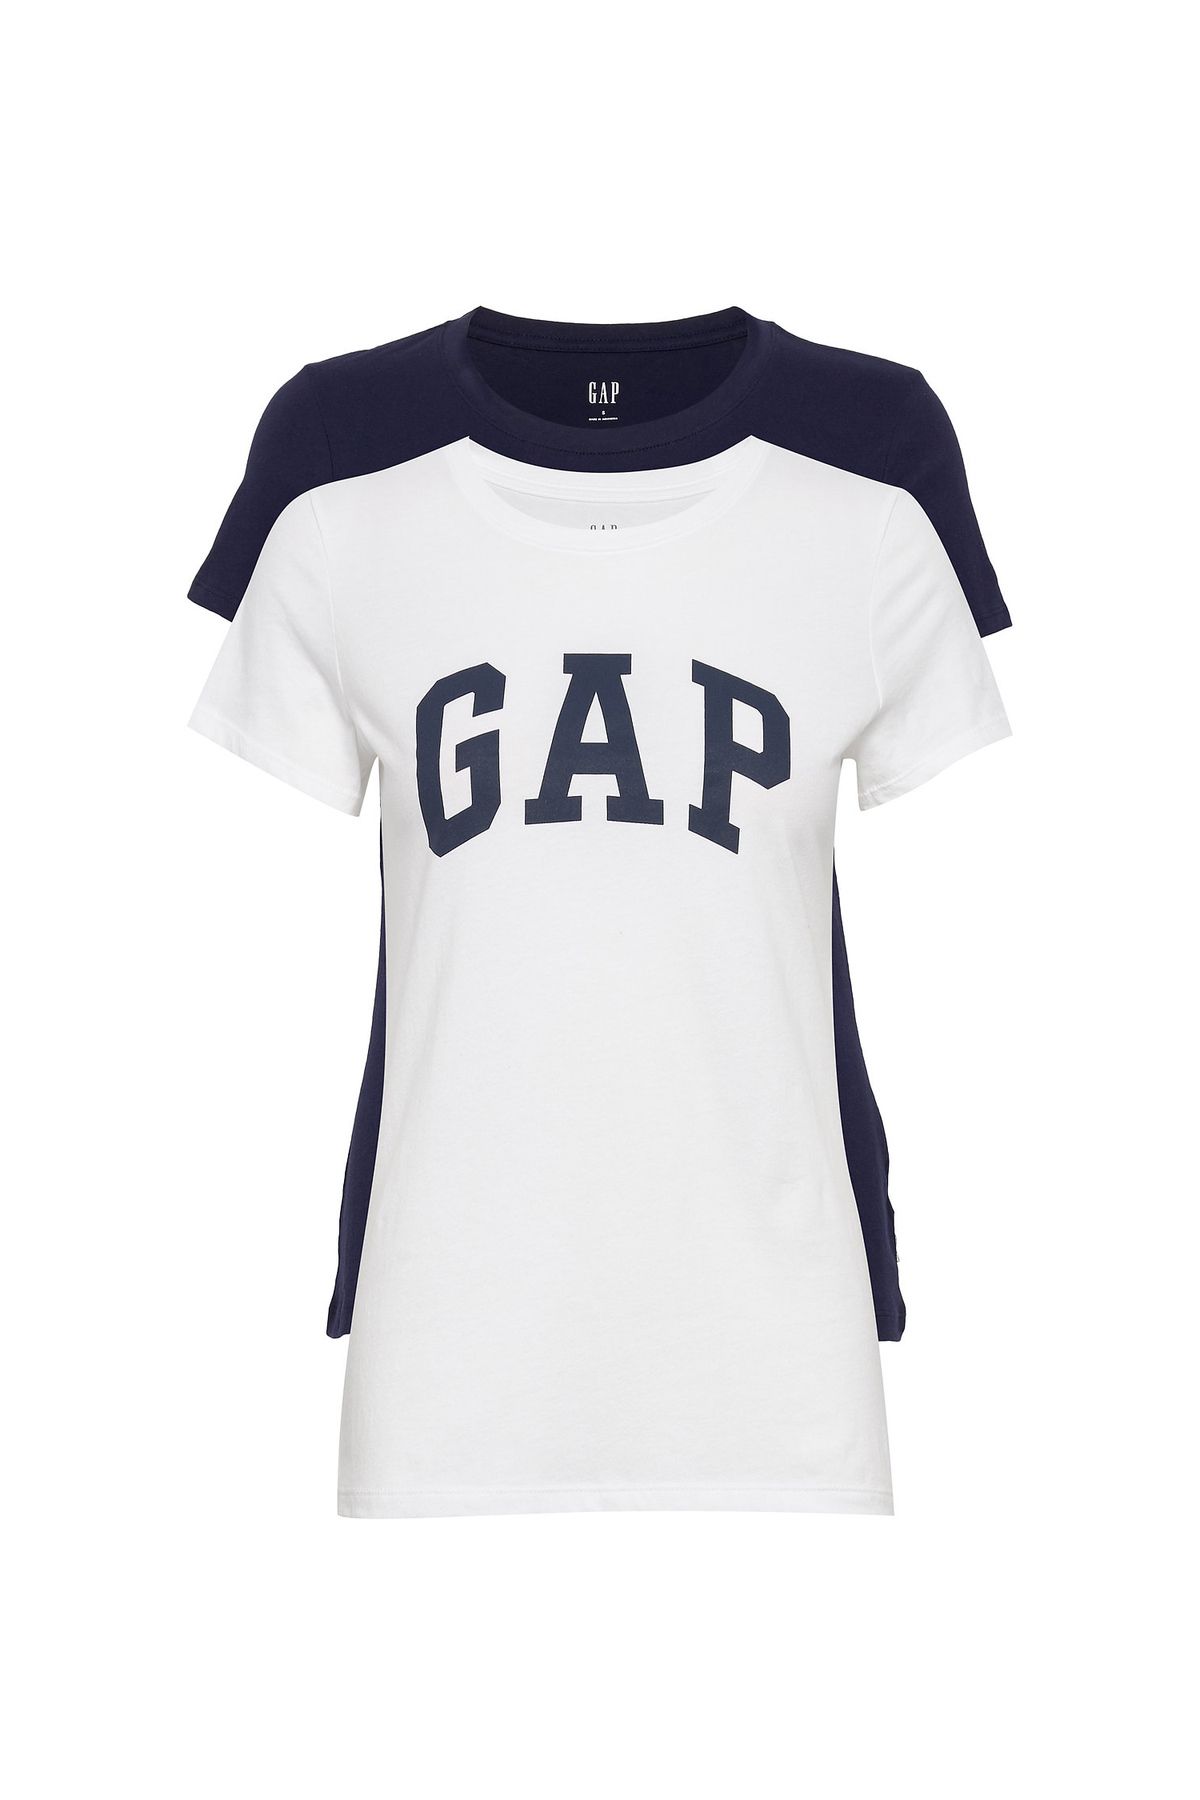 GAP Kadın Lacivert 2'li Gap Logo Kısa Kollu T-shirt